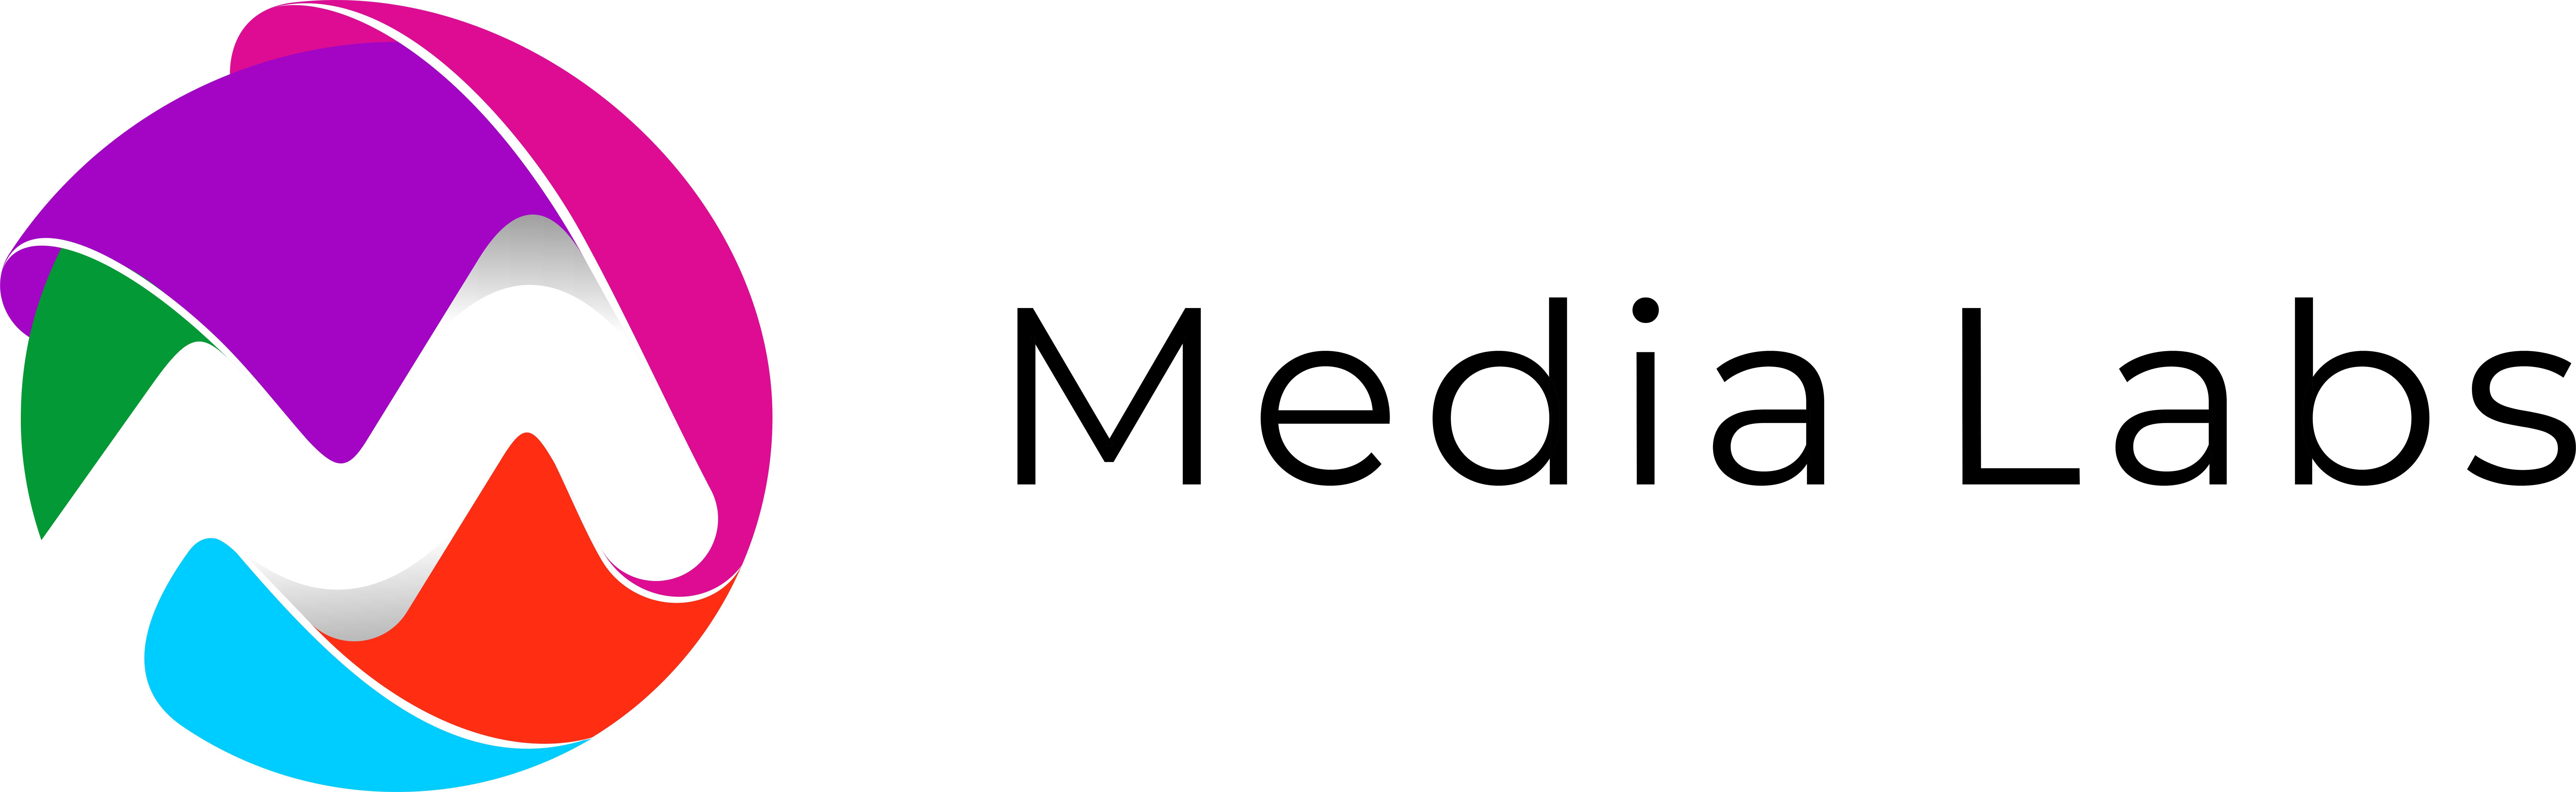 Media Labs Mx